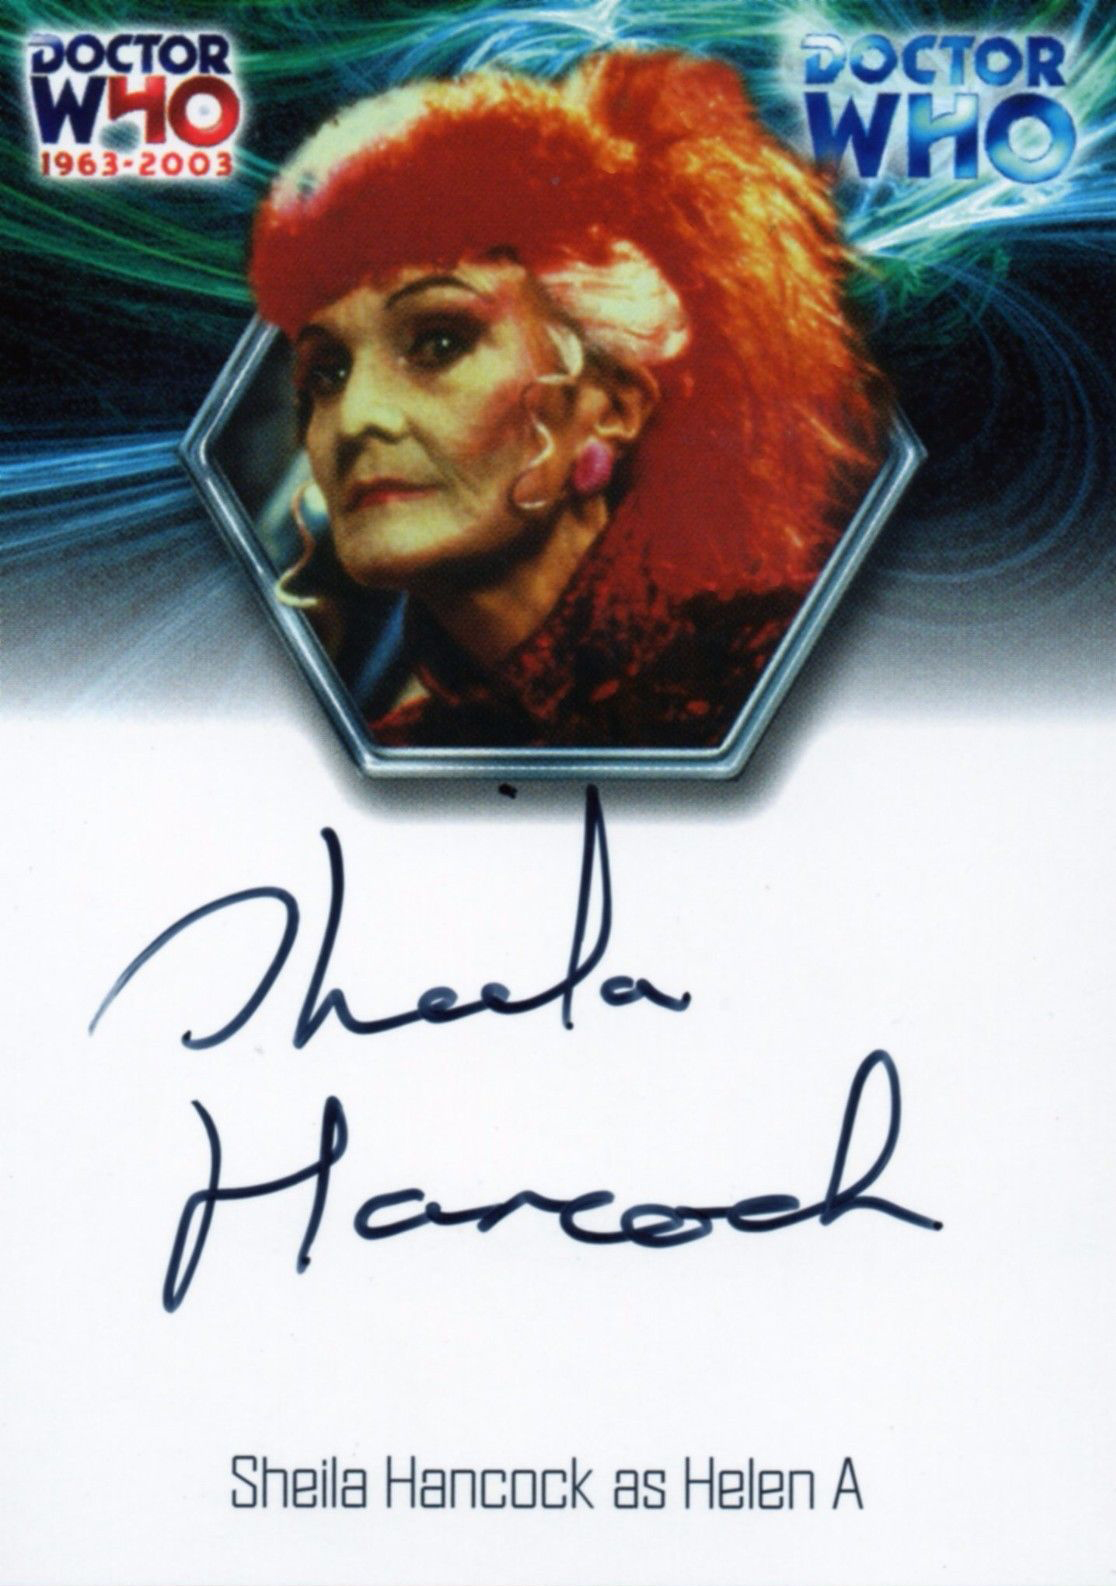  Sheila Hancock player image